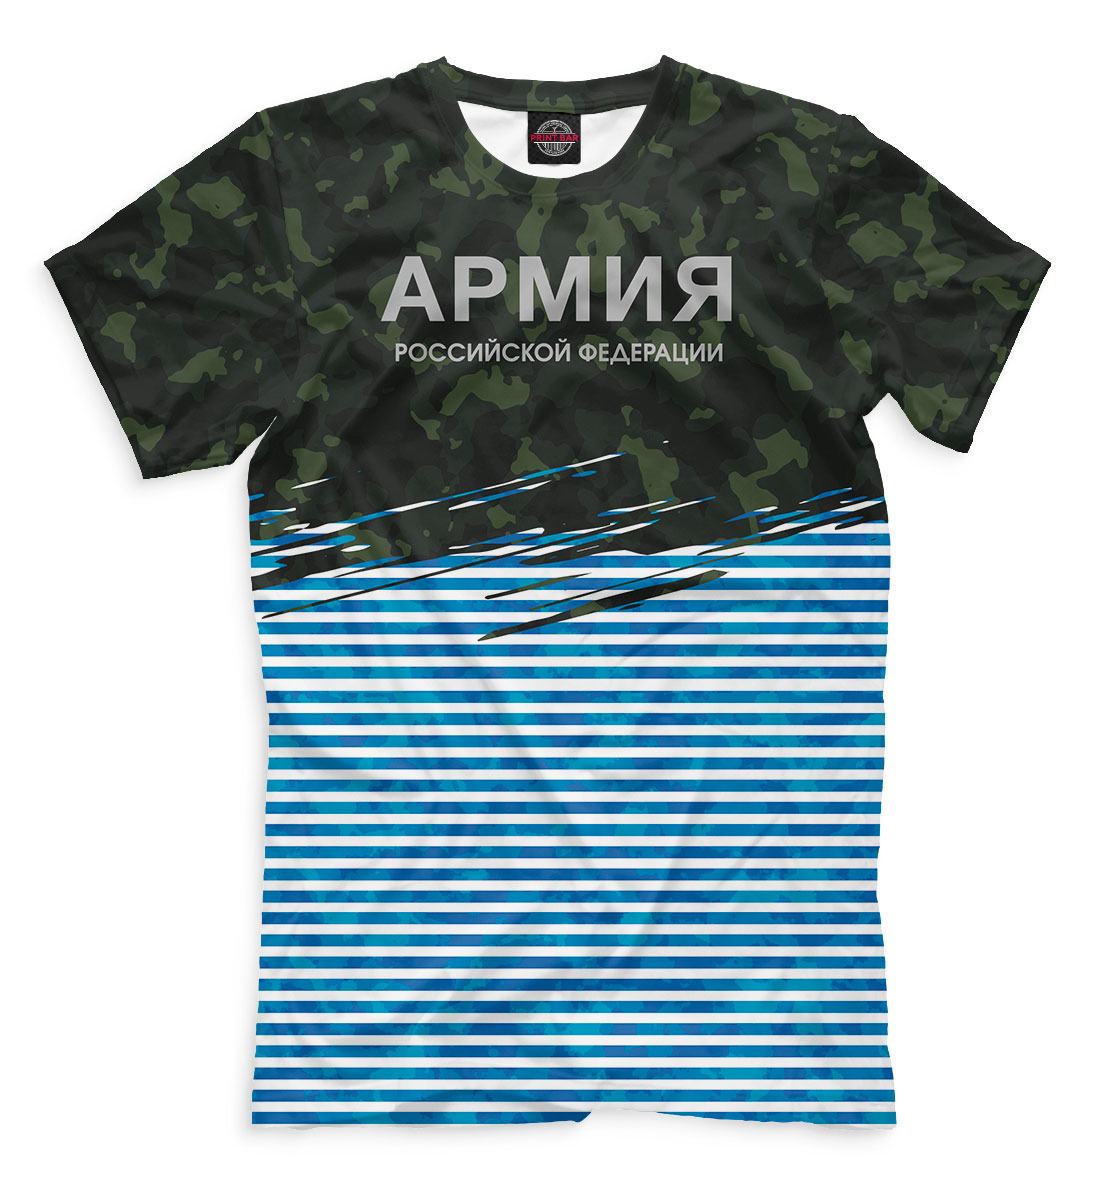 Футболка Армия Российской Федерации для мужчин, артикул: VST-684255-fut-2mp